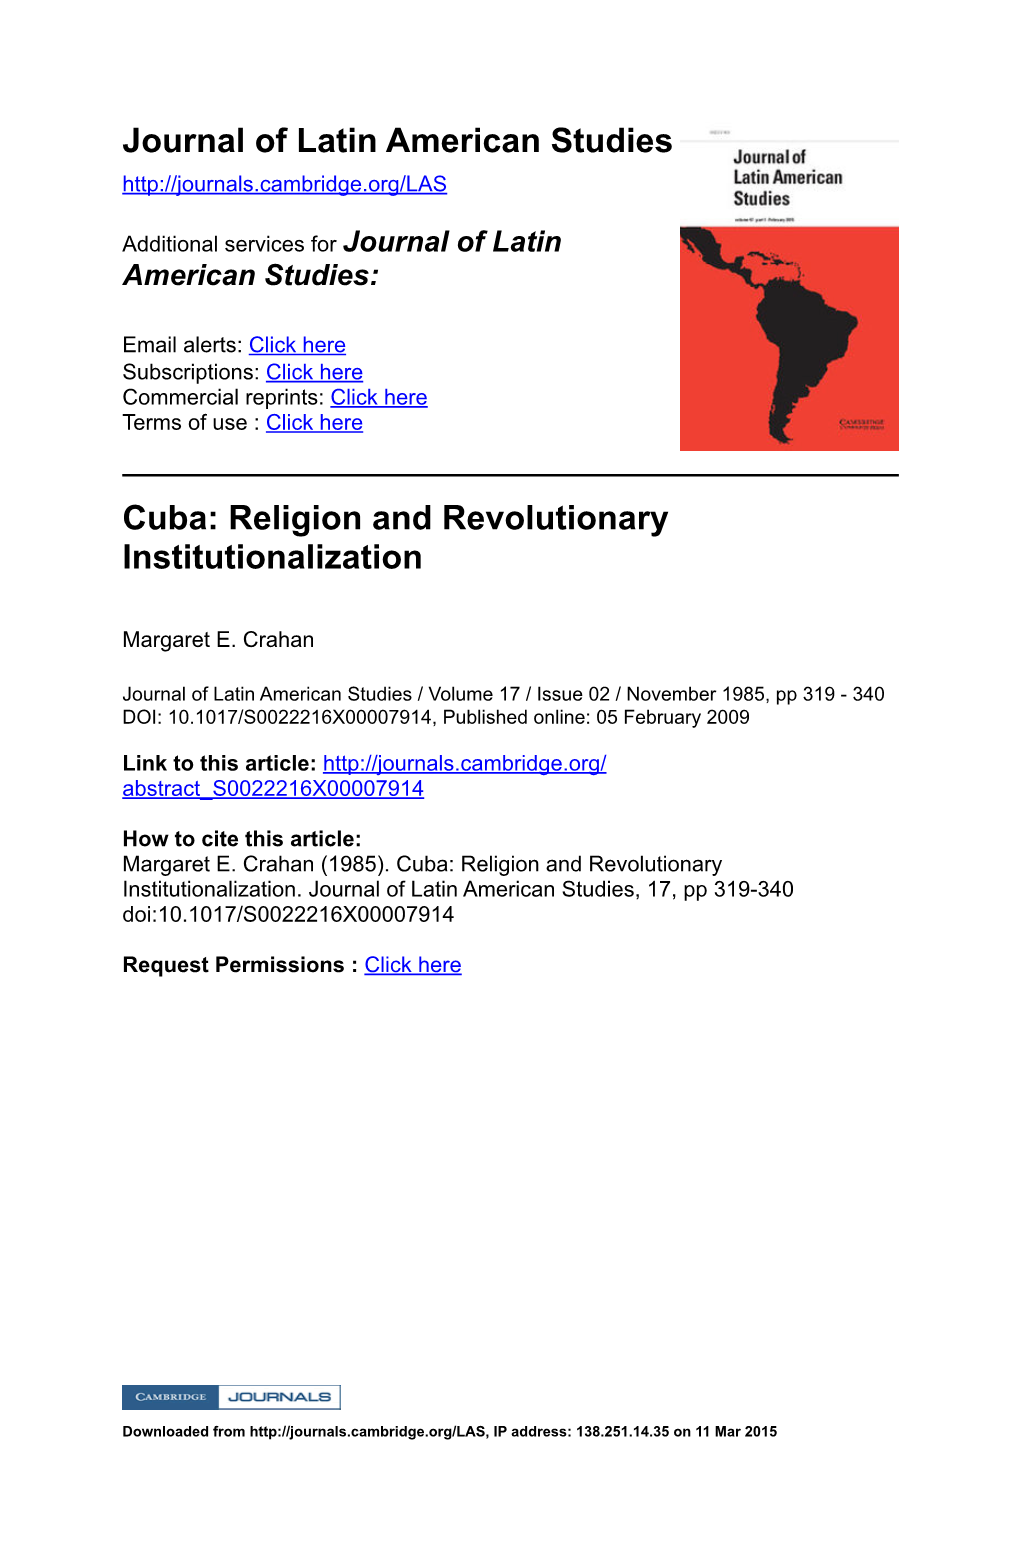 Cuba: Religion and Revolutionary Institutionalization